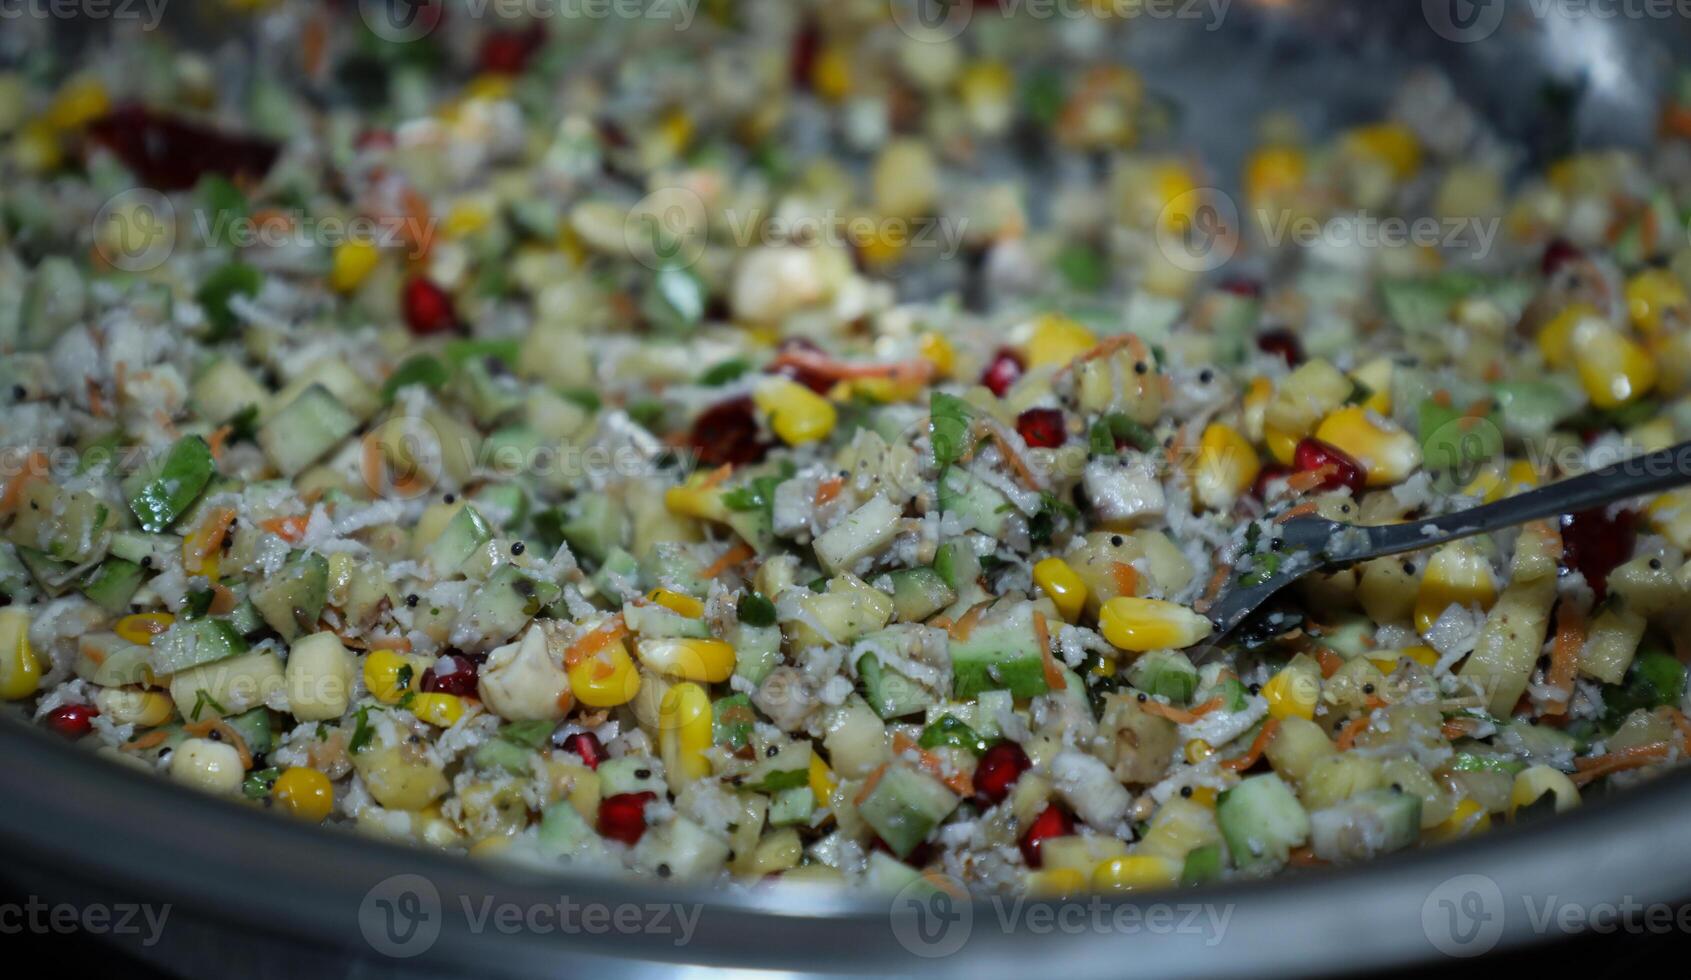 Indien style mixte salade, fruit salade, blé des légumes salade photo